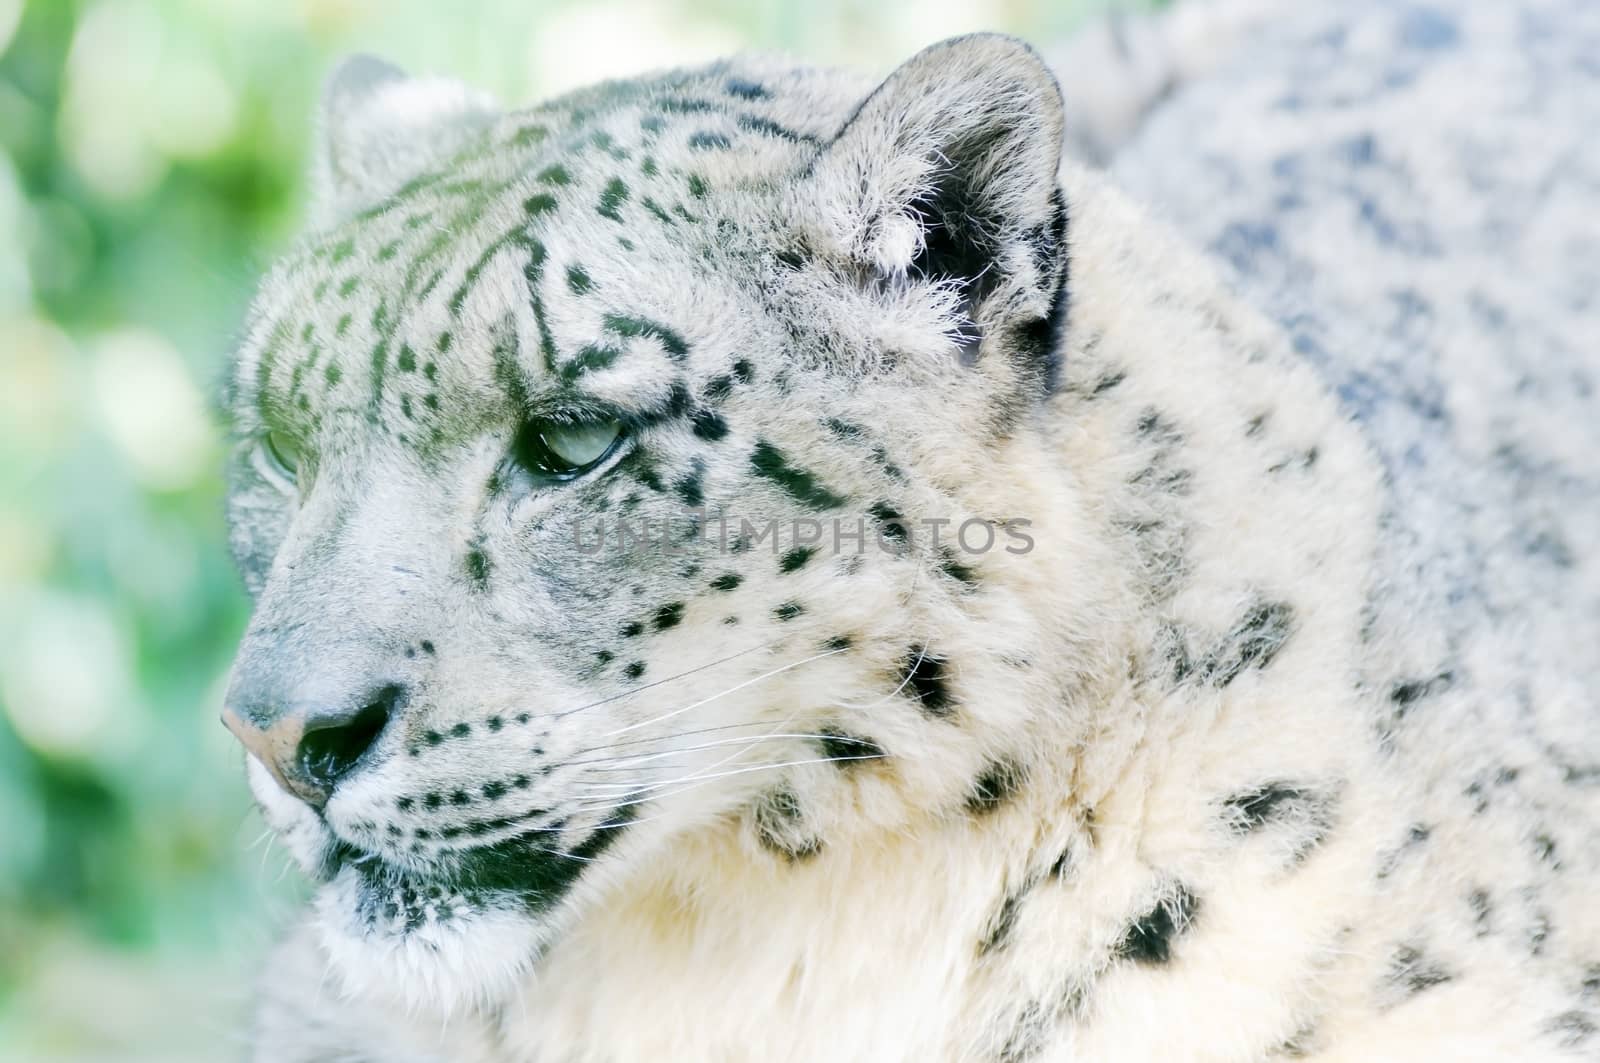 Snow leopard closeup of head showing spots on fur